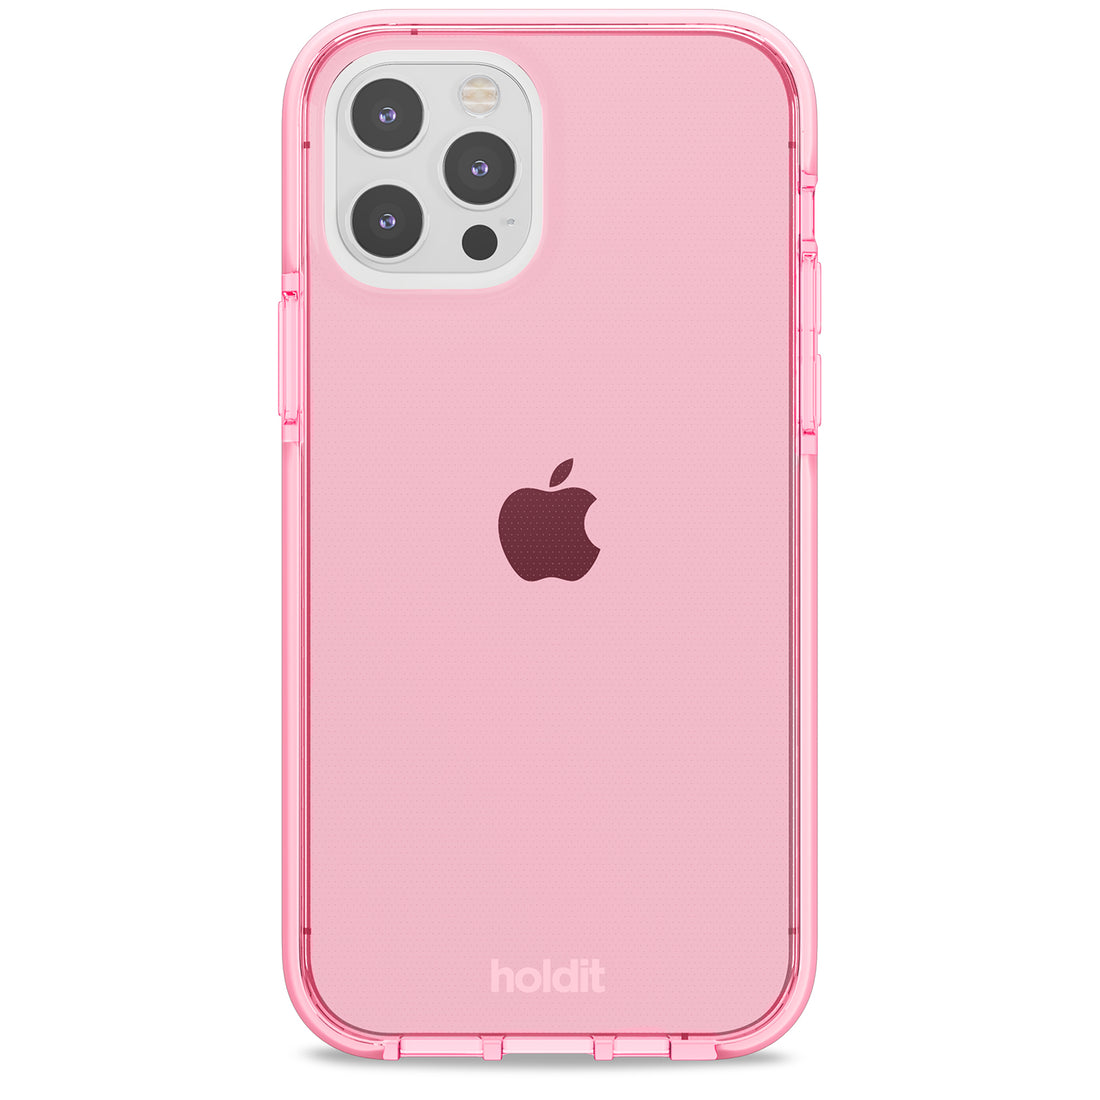 Seethru Case iPhone 12/12 Pro Bright Pink